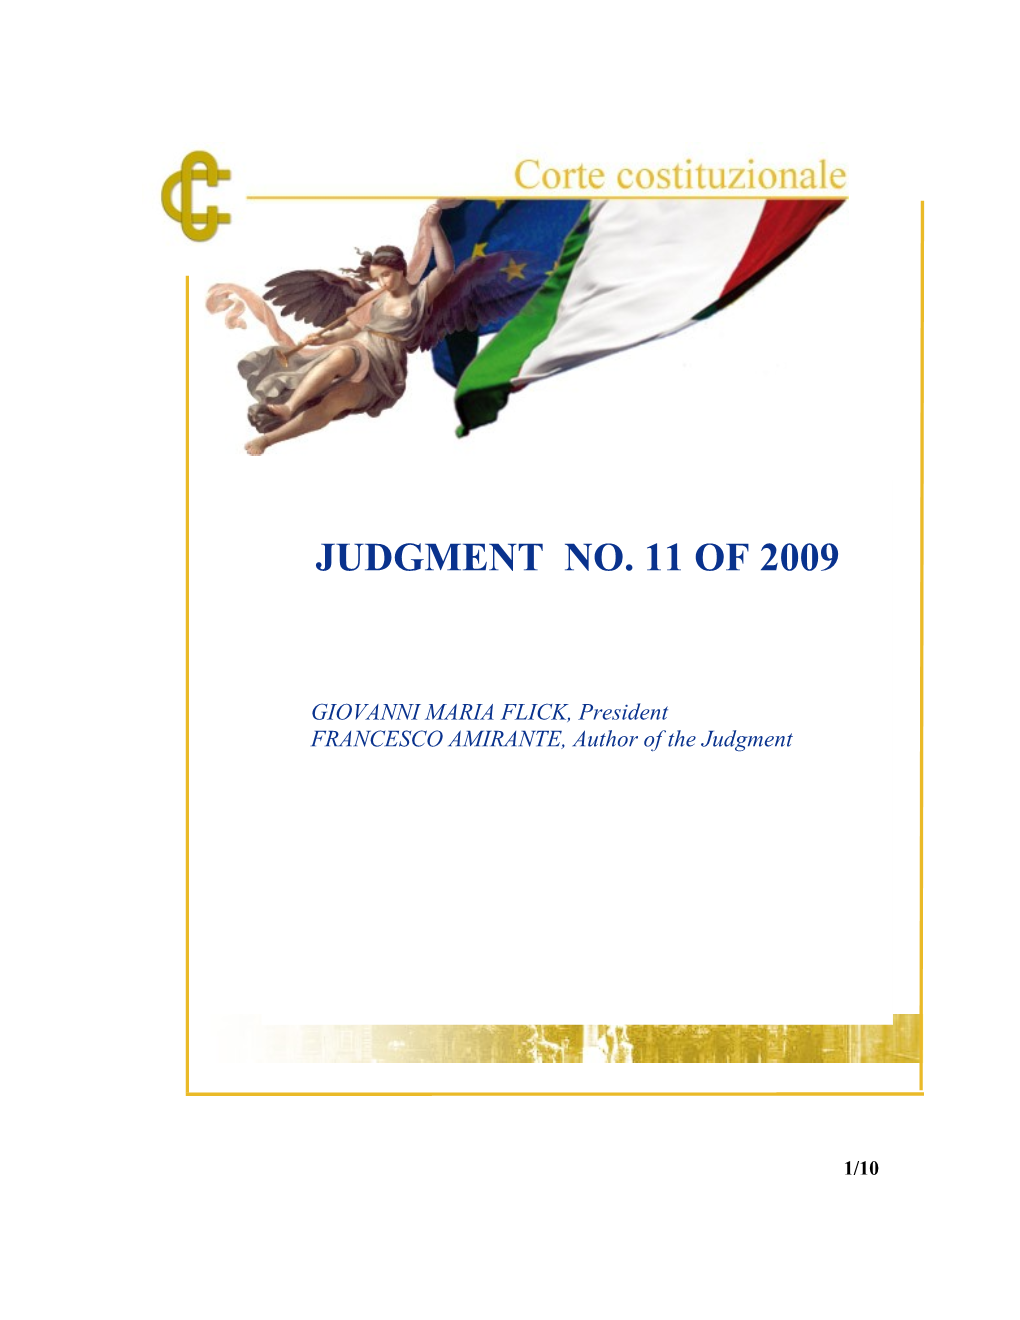 JUDGMENT No. 11 YEAR 2009